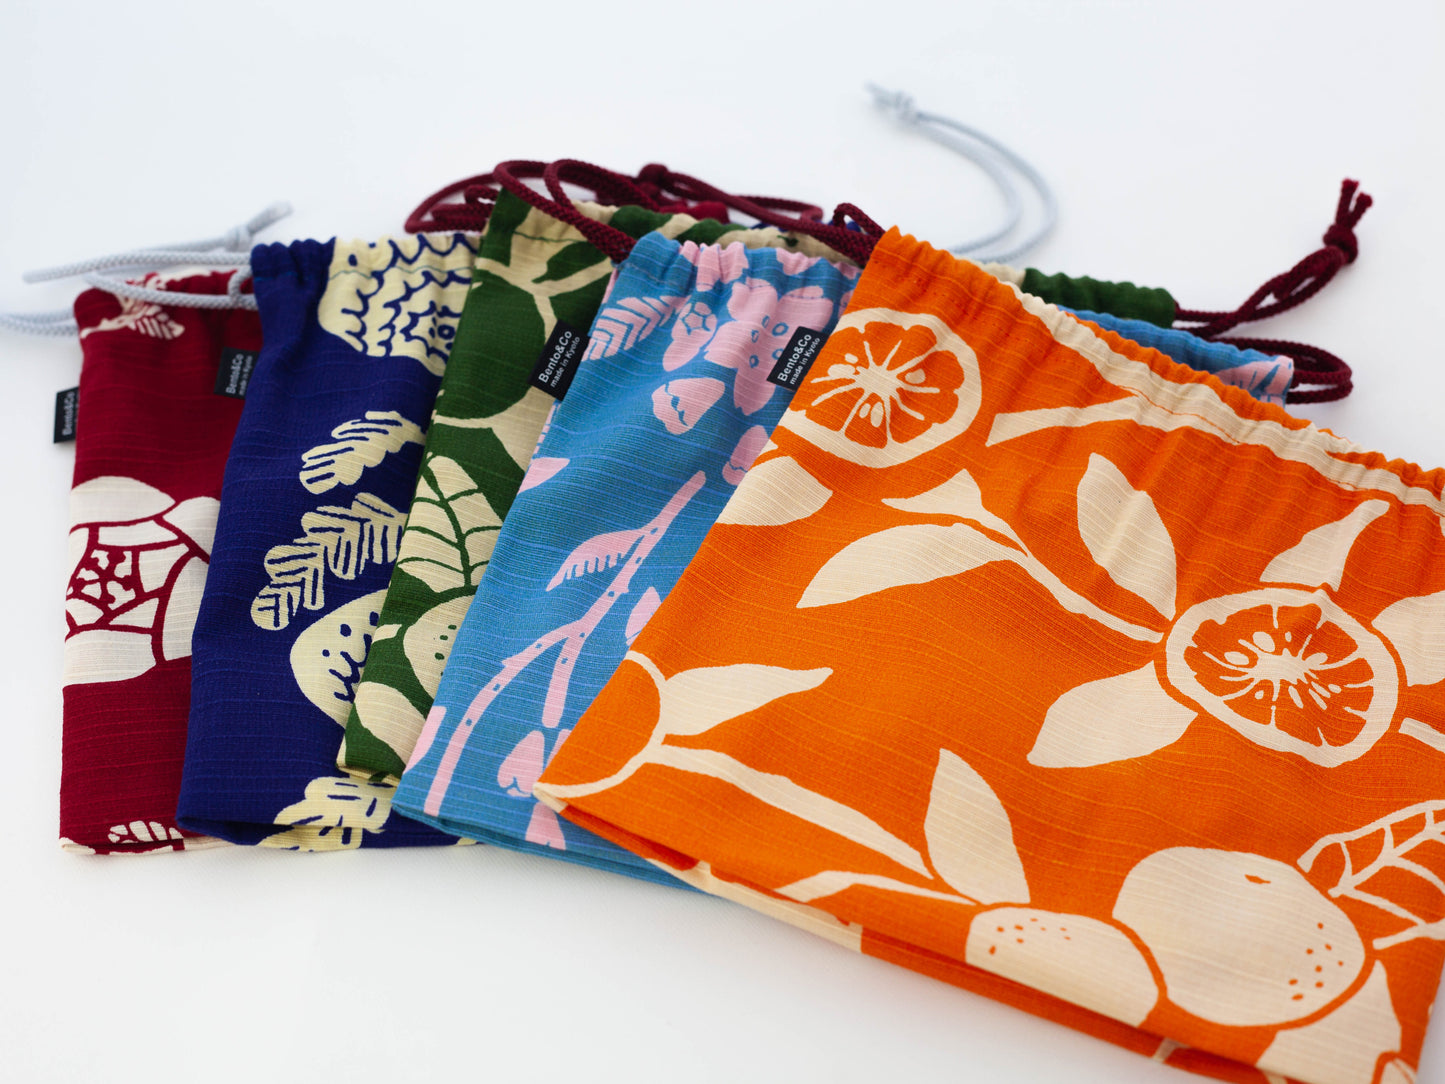 Original Furoshiki Bag | Orange by Sanyo Shoji - Bento&co Japanese Bento Lunch Boxes and Kitchenware Specialists